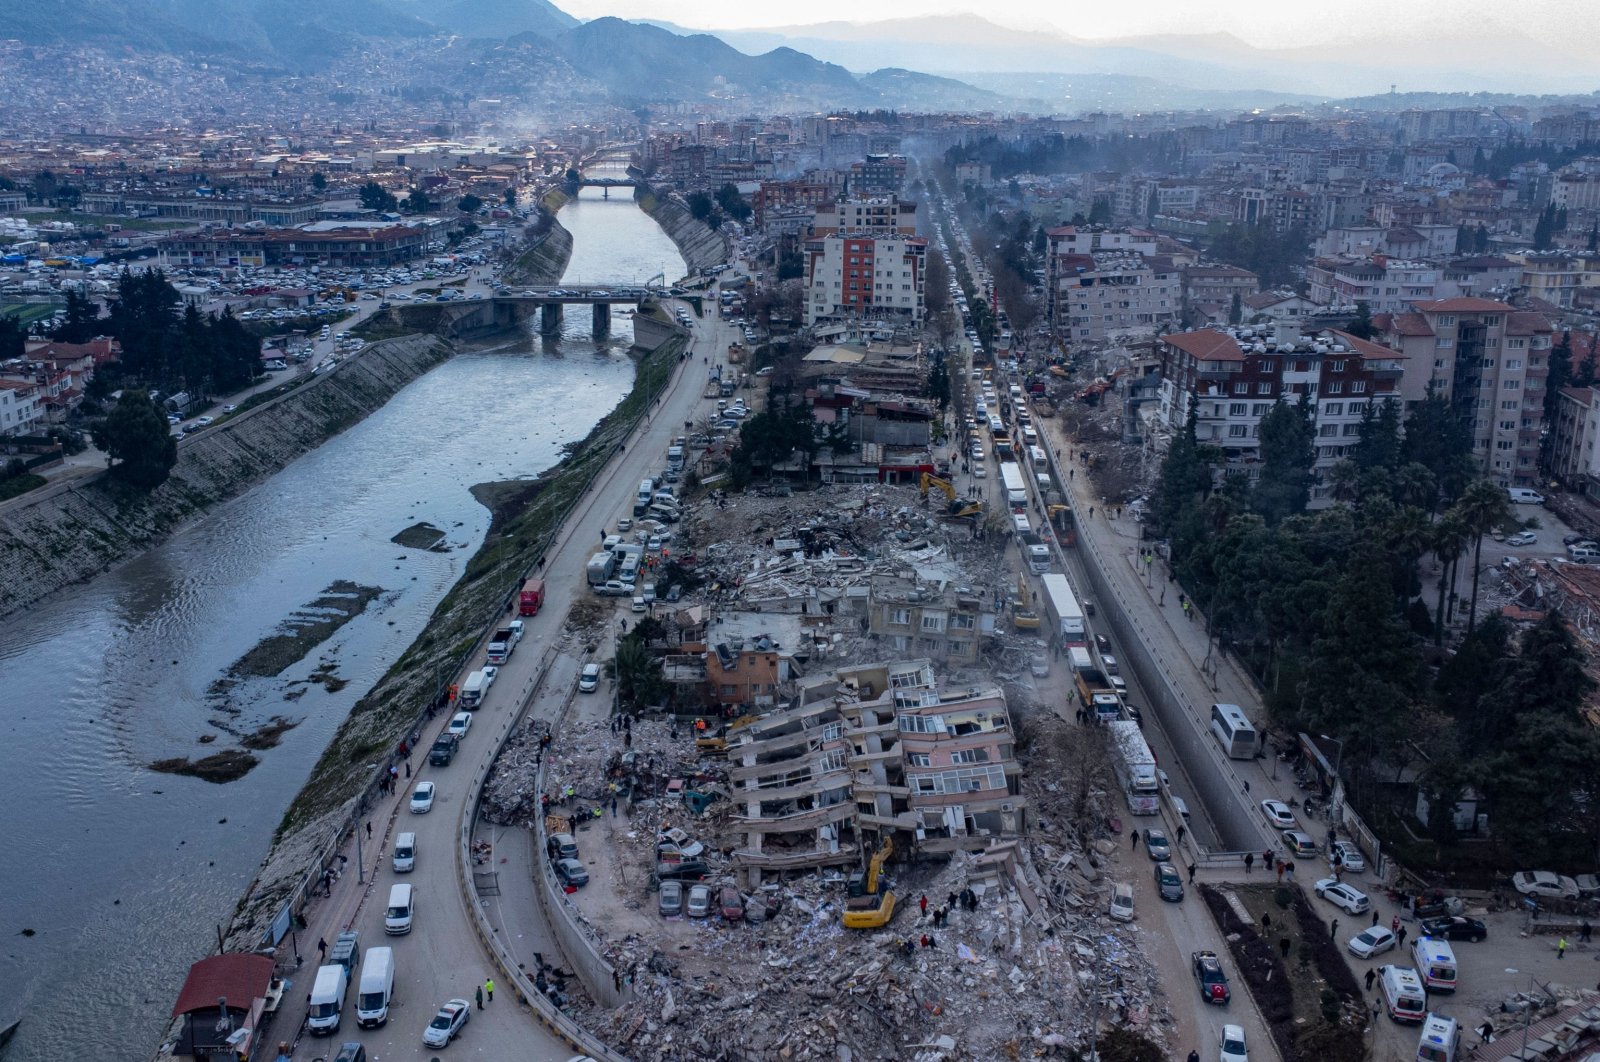 Gempa kembar di Türkiye: Luka umat manusia